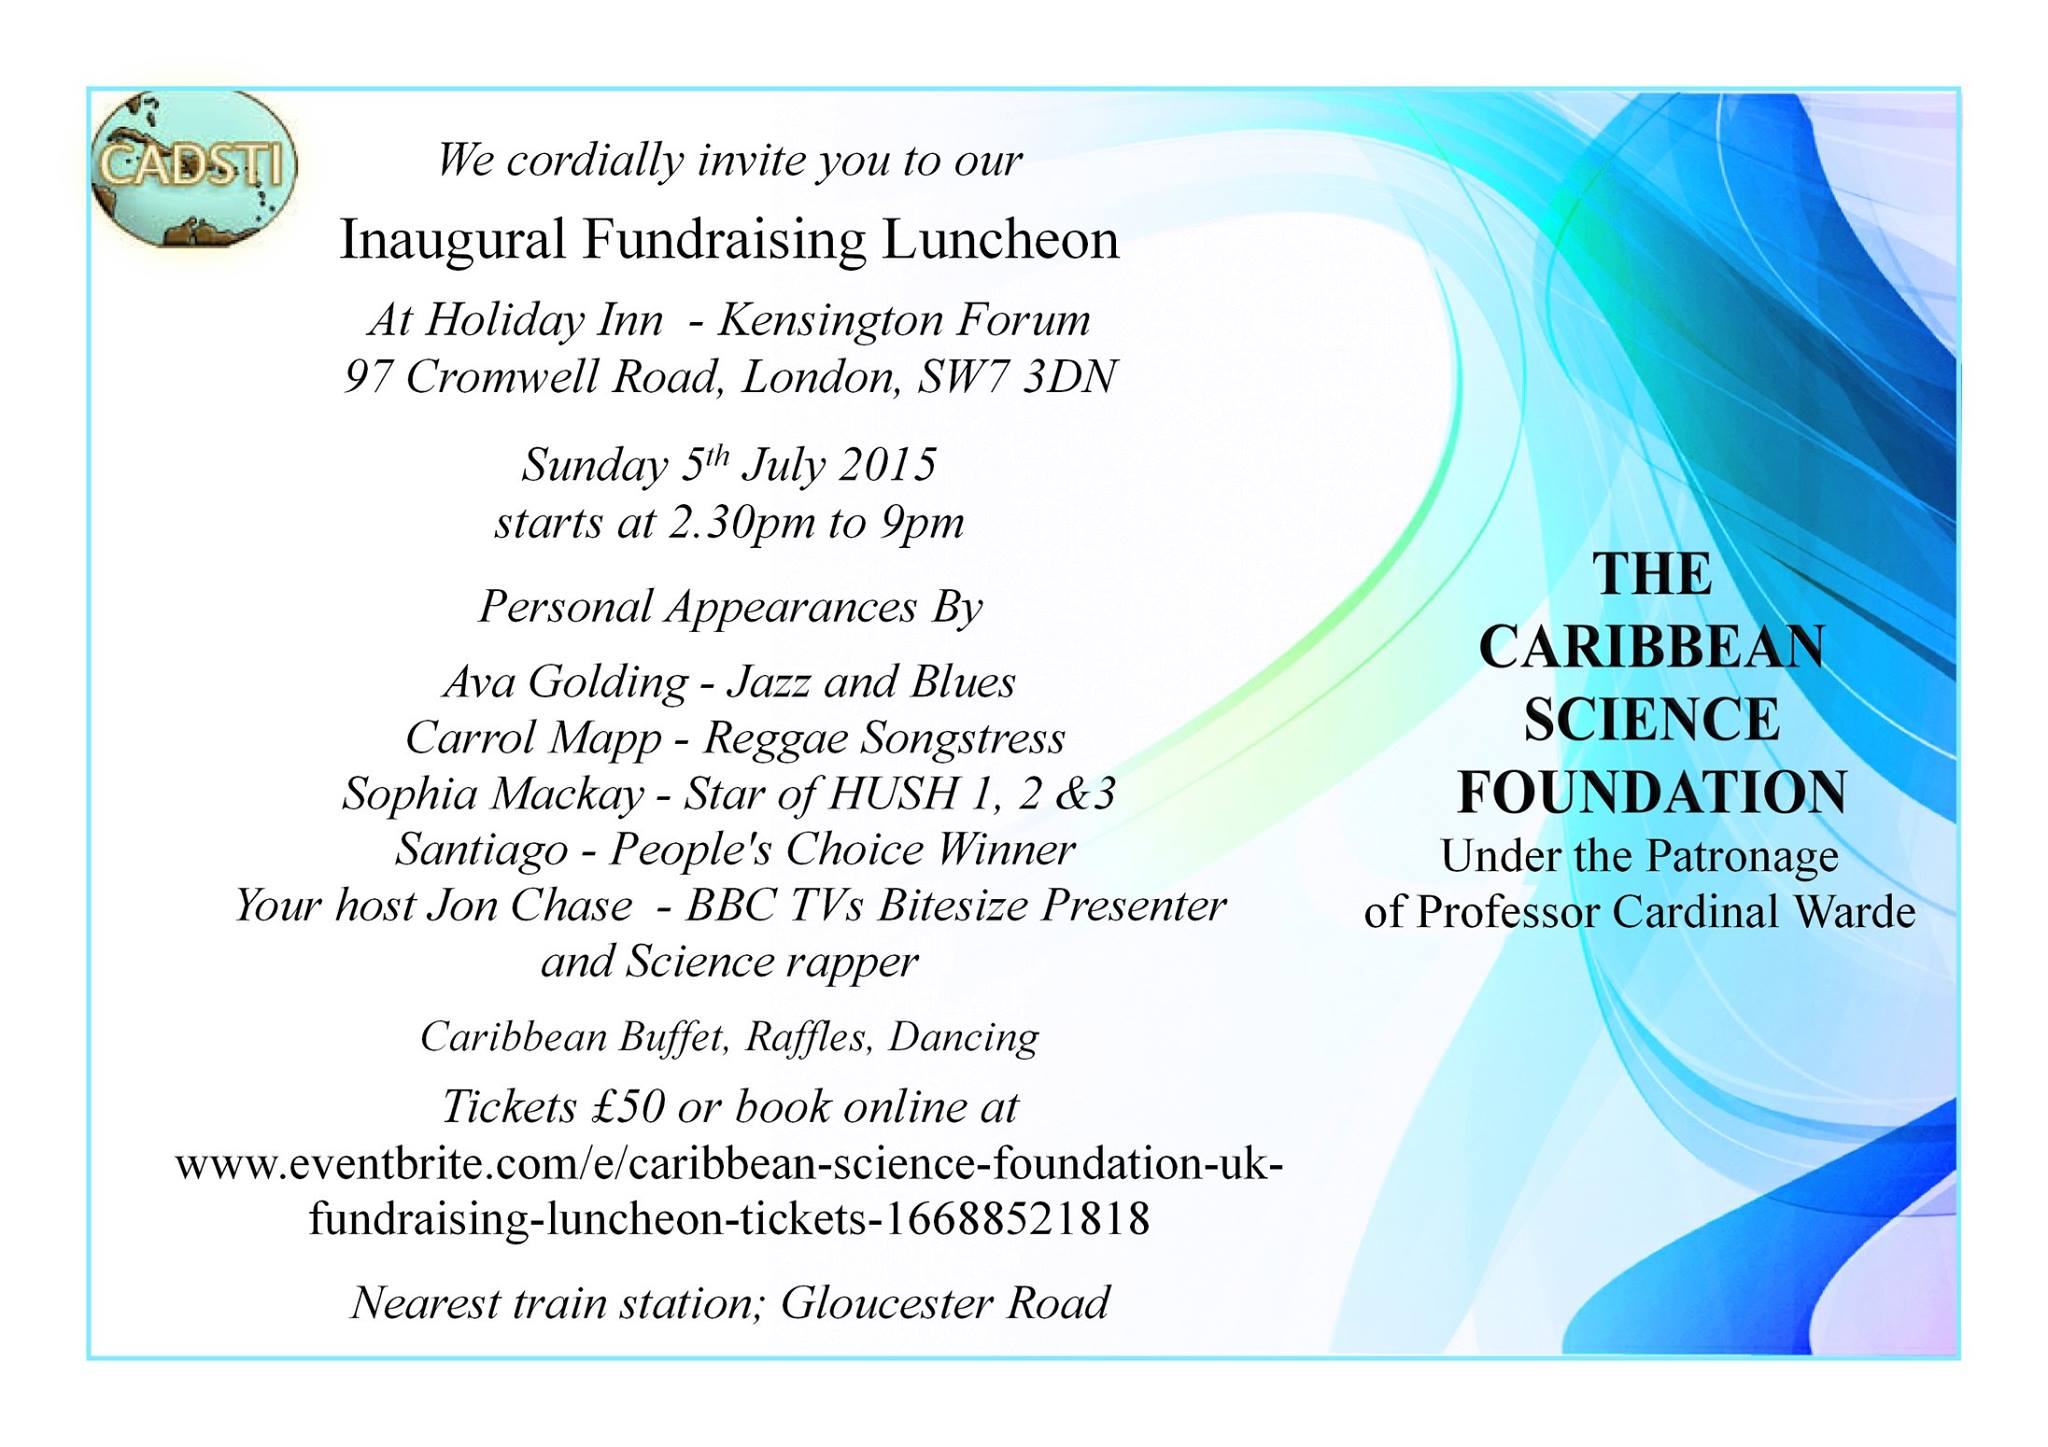 CADSTI-UK Inaugural Fundraising Luncheon